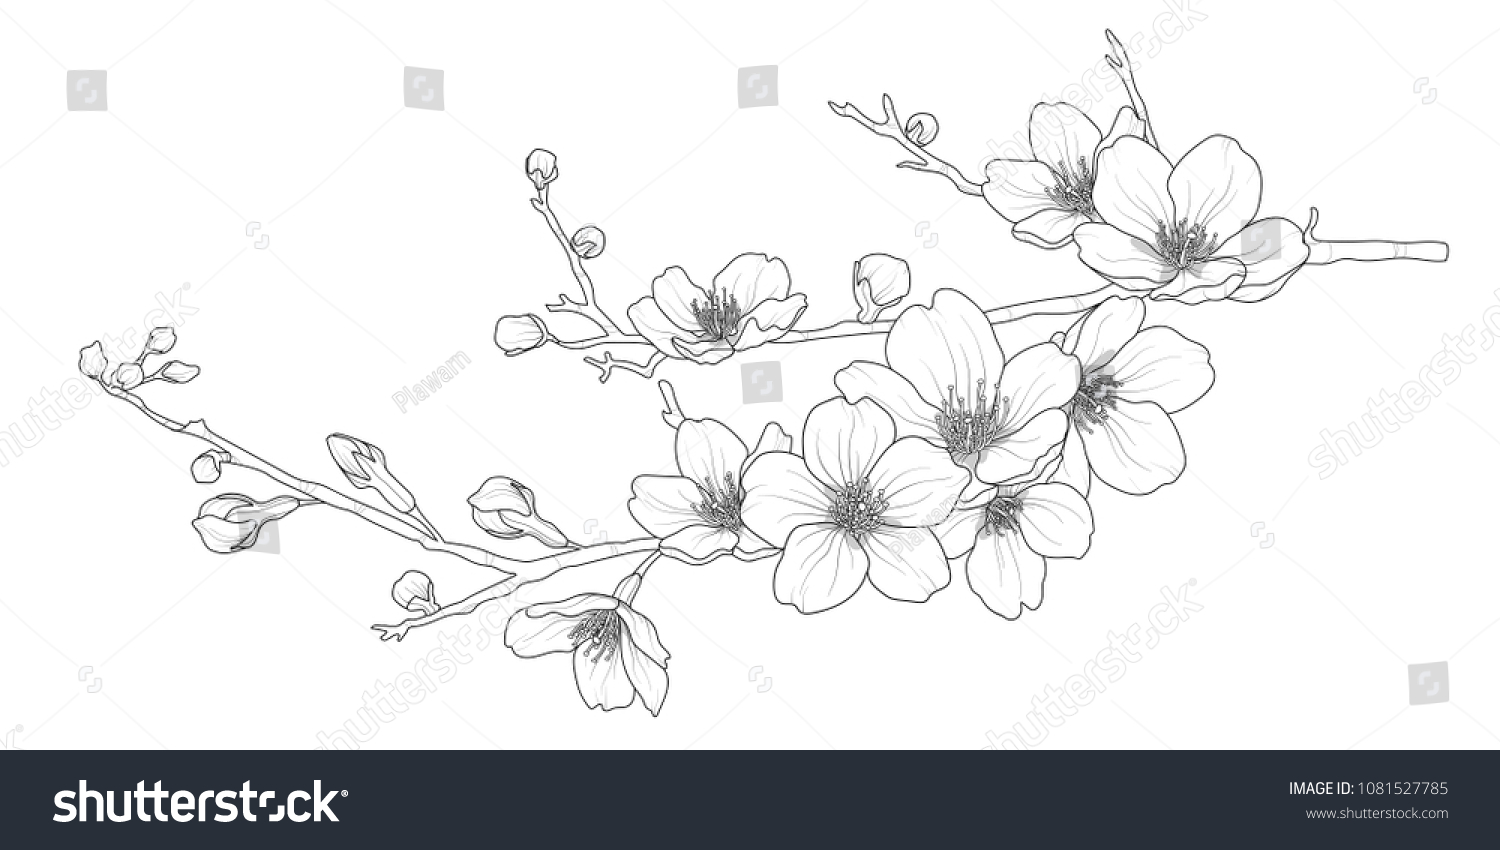 Cute hand drawn isolated sakura branch set 1. Flower vector illustration in black outline and white plane on white background.